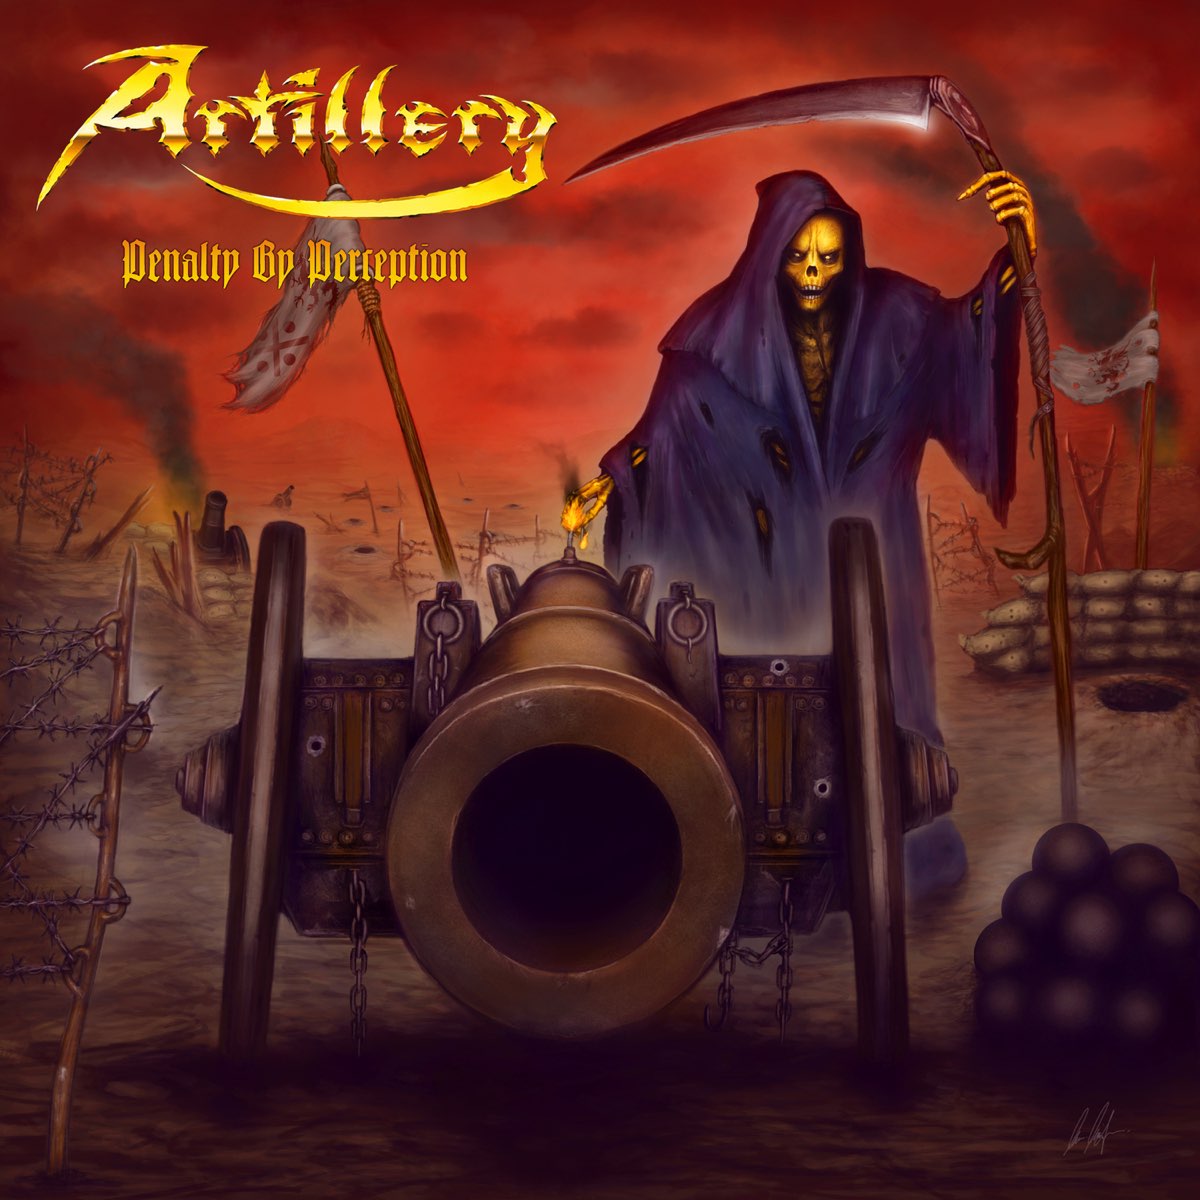 Penalty by Perception - Album by Artillery - Apple Music